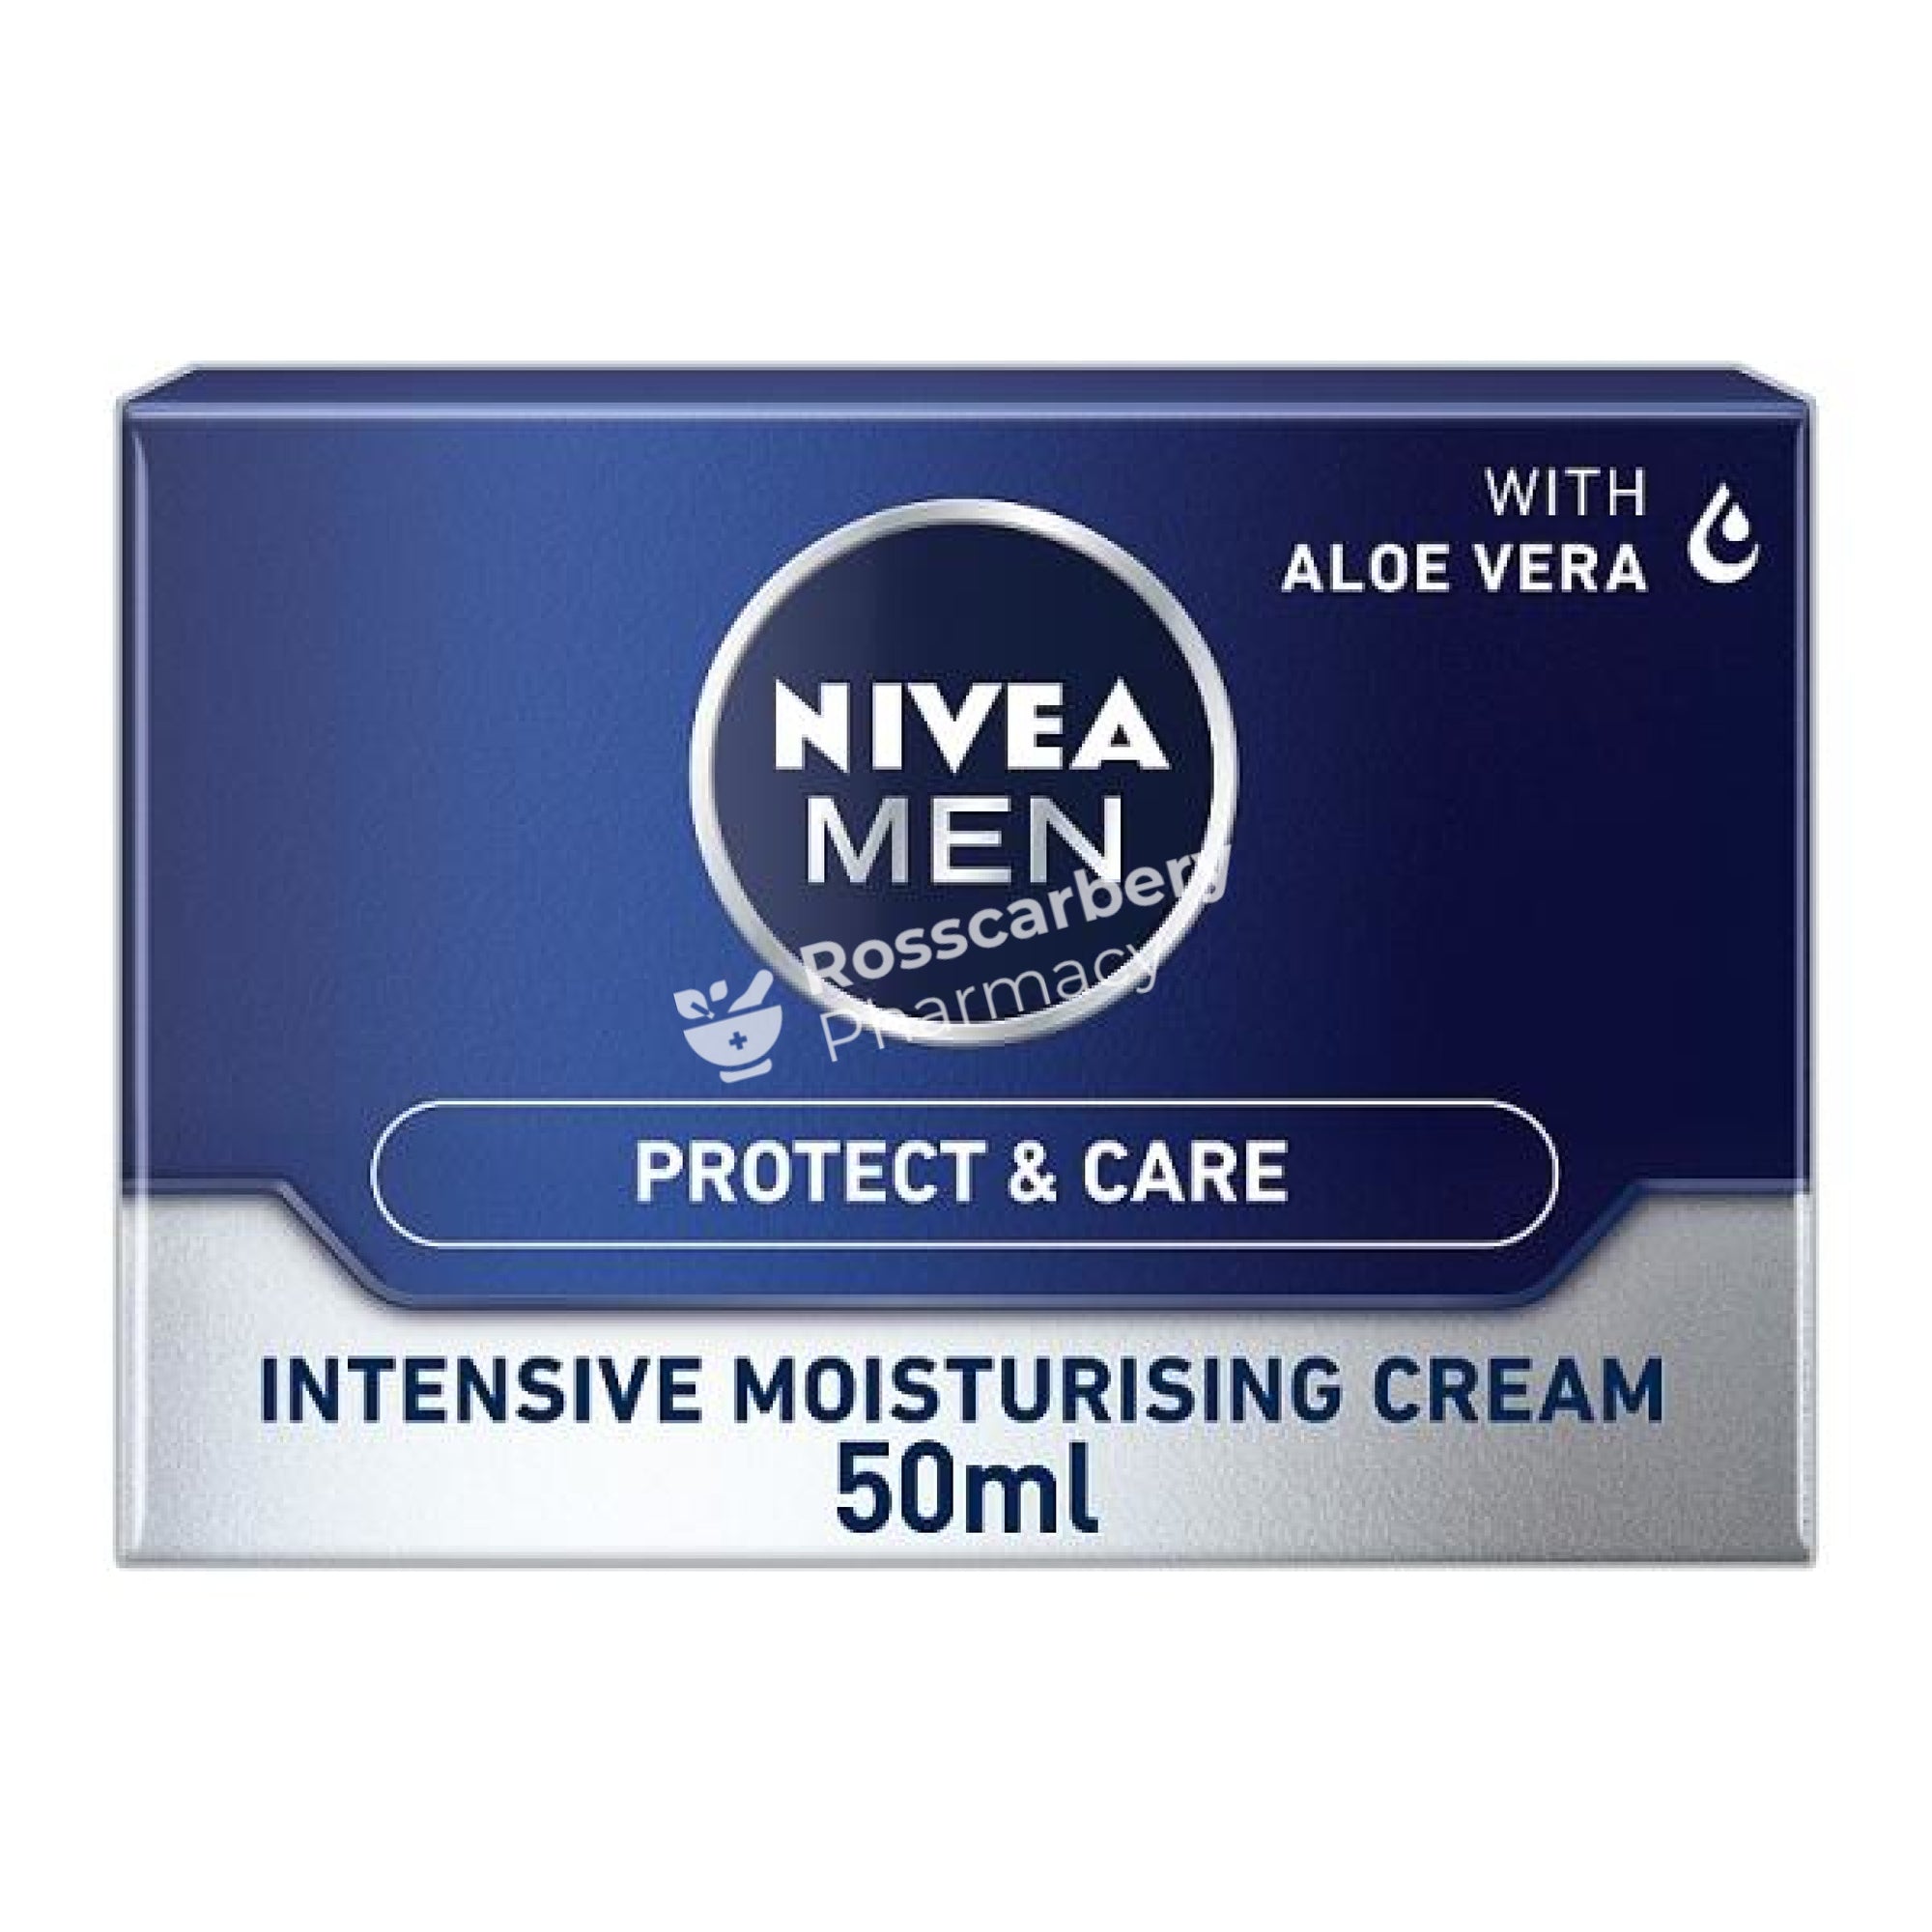 Nivea Men Protect & Care Intensive Moisturising Cream With Aloe Vera Moisturiser